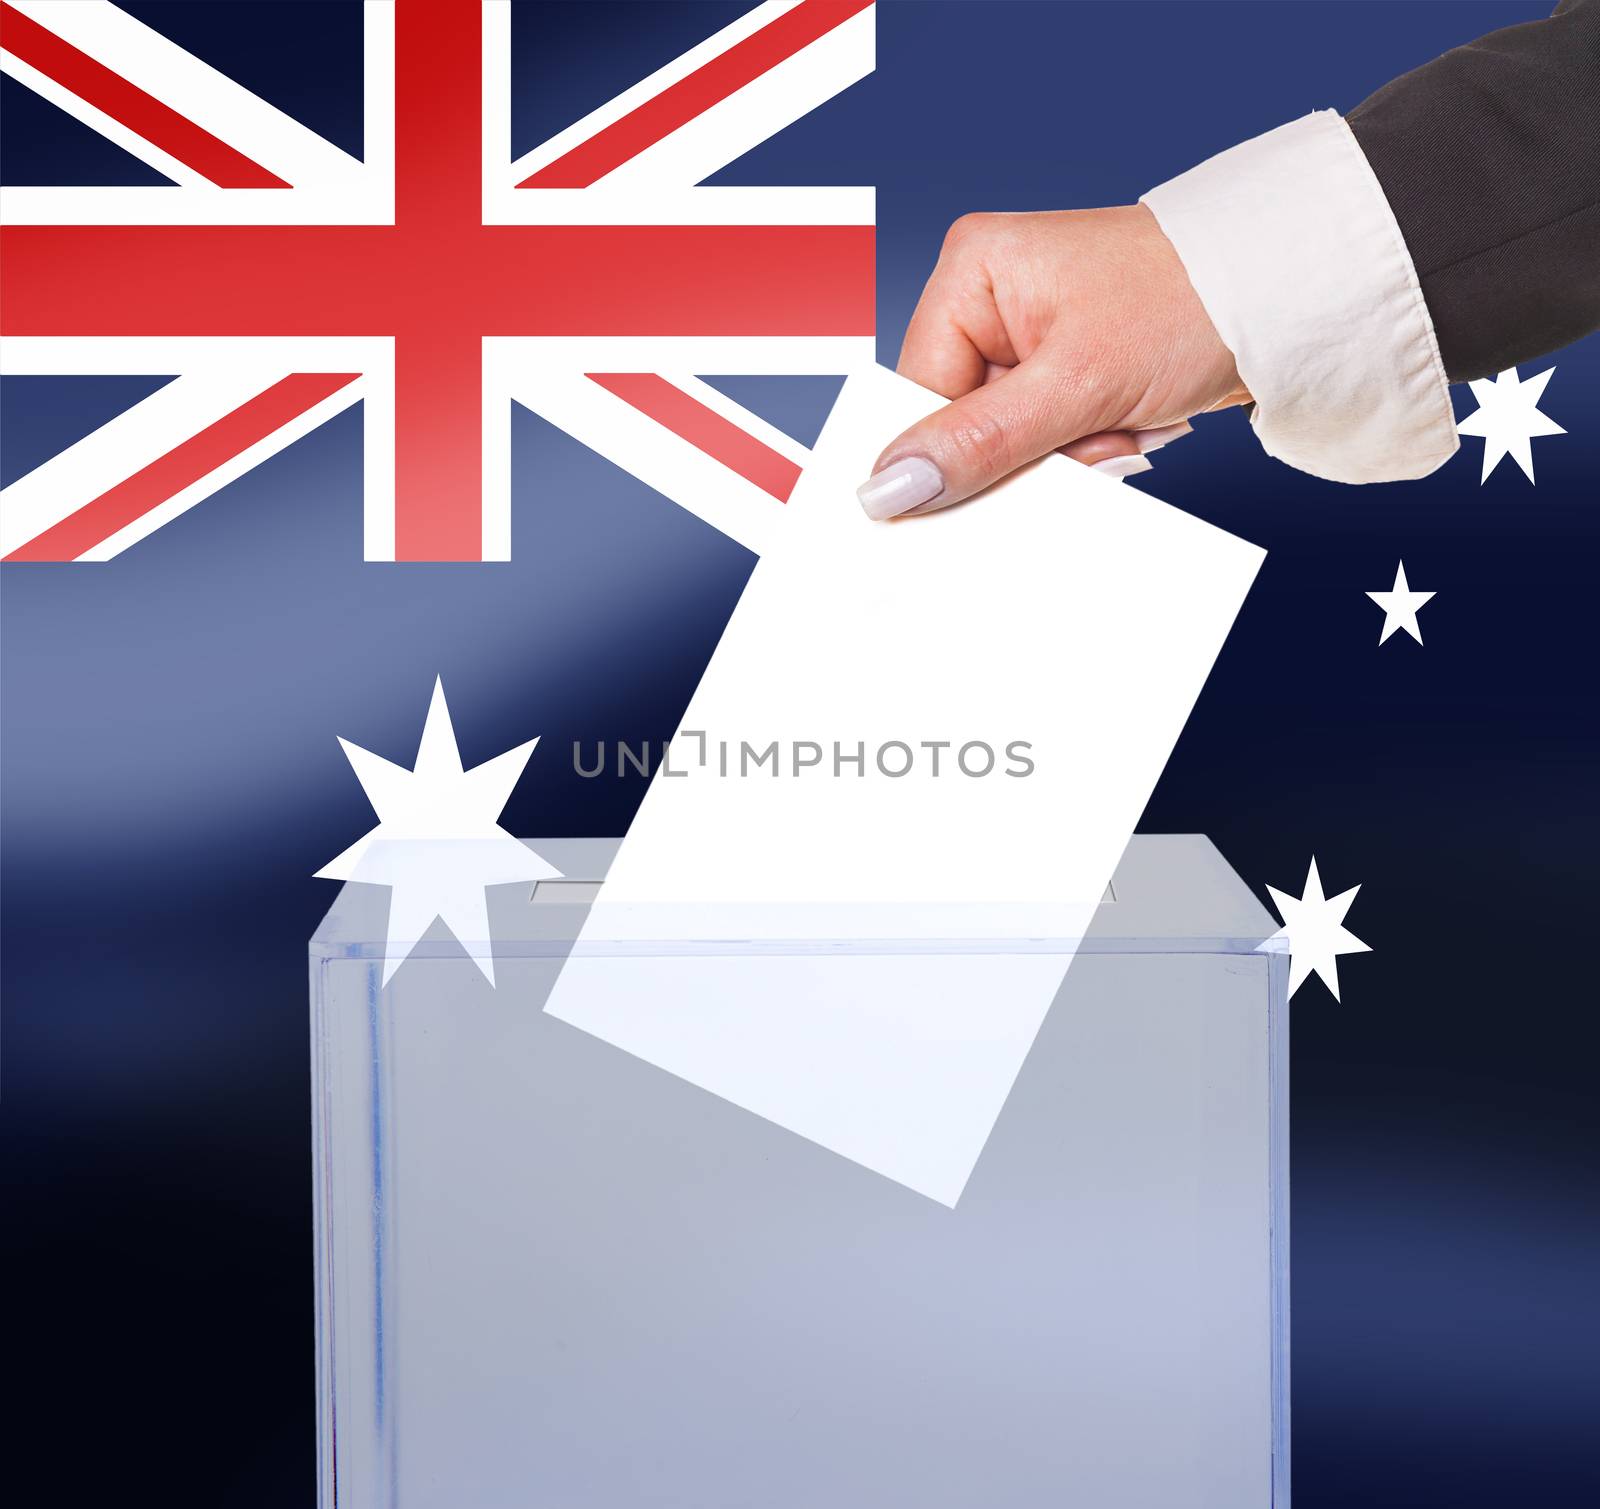 electoral vote by ballot, under the Australia flag